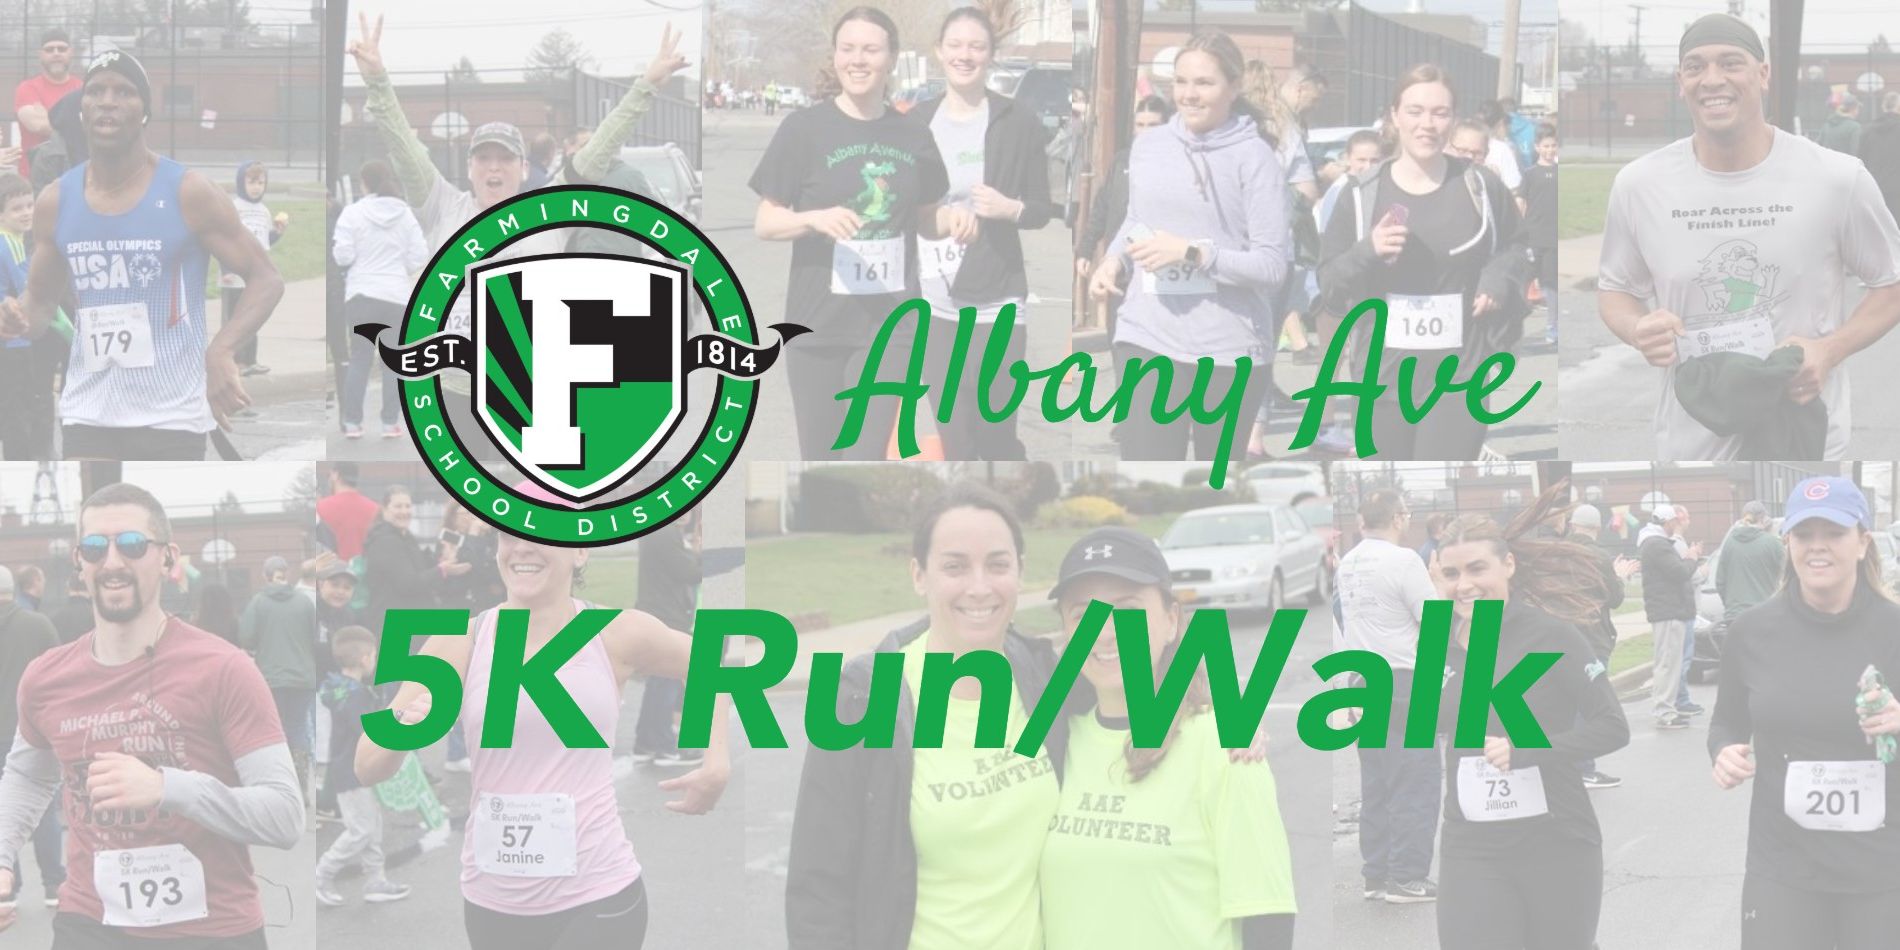 Albany Ave 5K Run/Walk promotional image